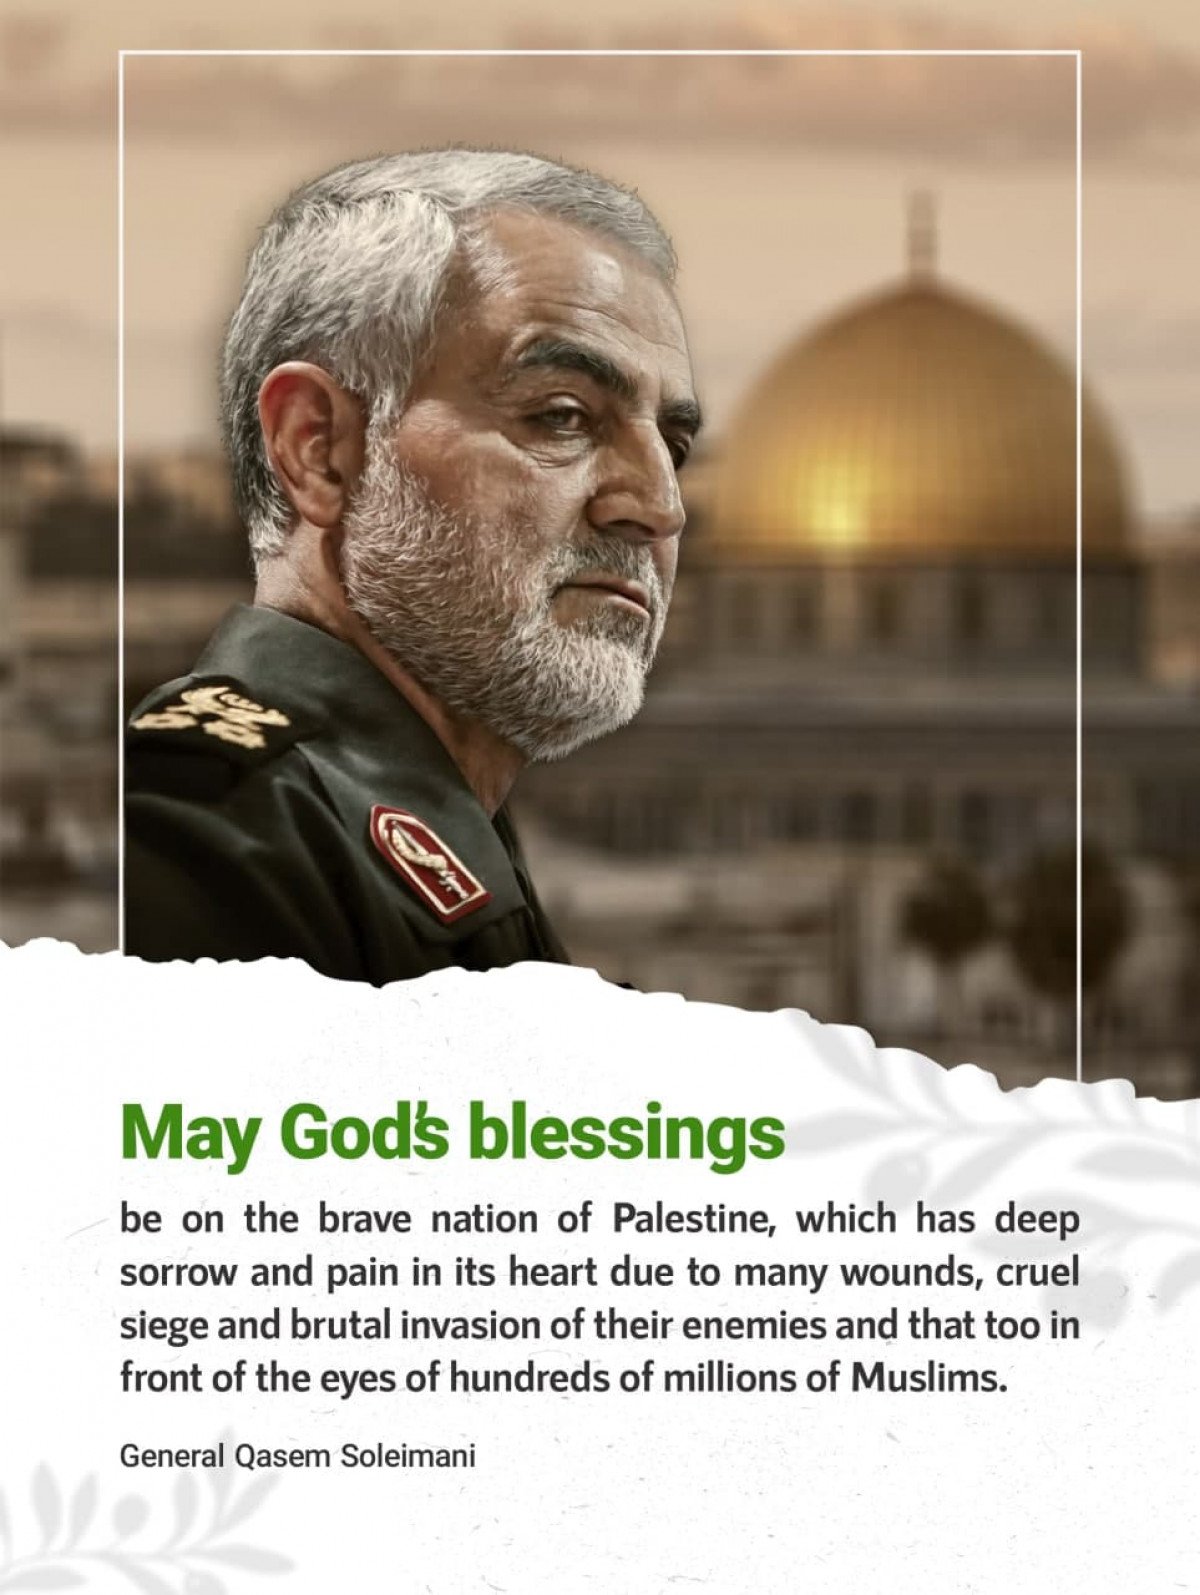 General Qasem Soleimani: May God's blessings